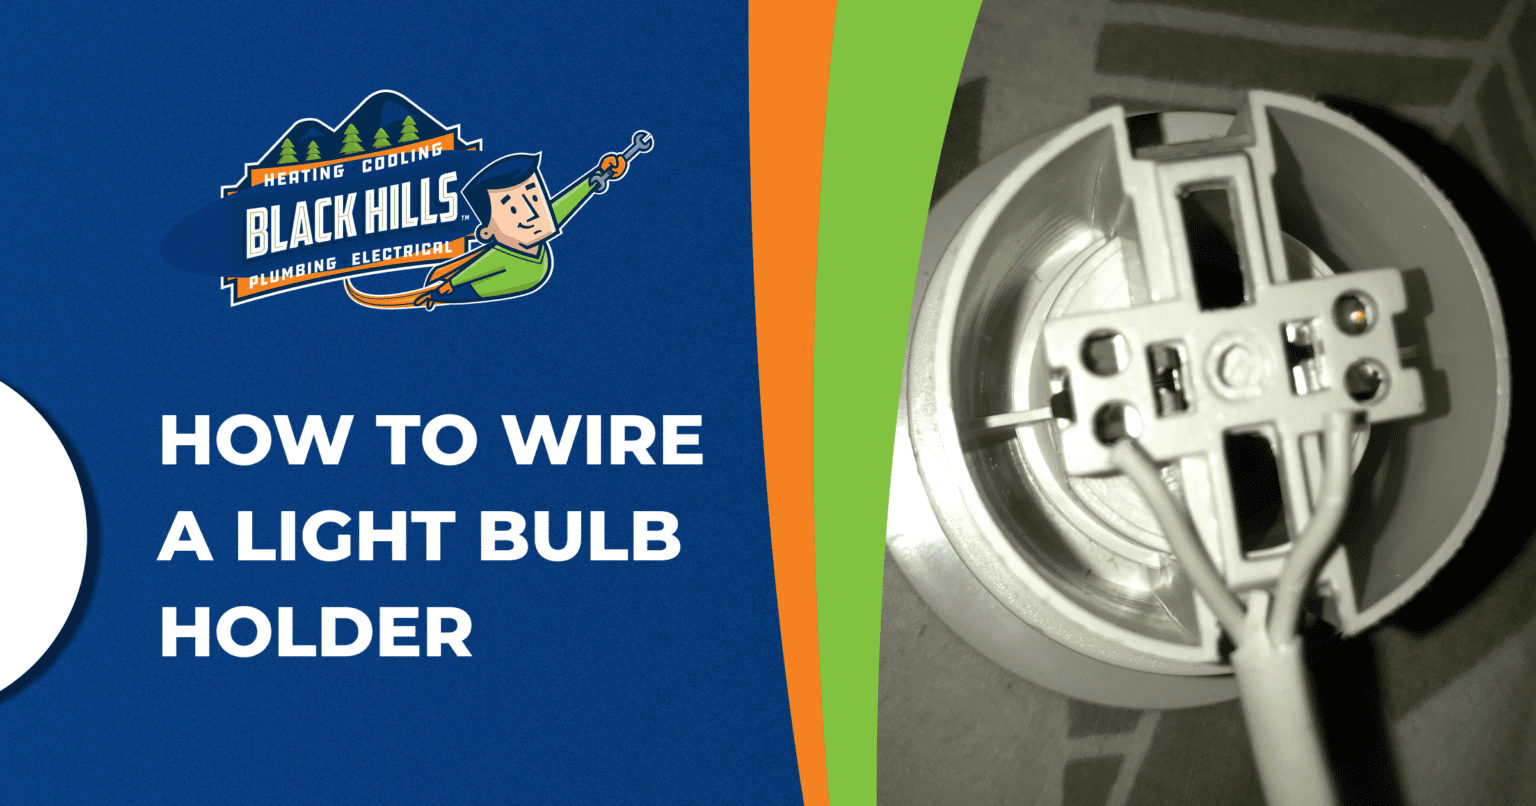 https://www.blackhillsinc.com/wp-content/uploads/2022/10/Black-Hills-How-to-Wire-a-Light-Bulb-Holder-1536x806.png